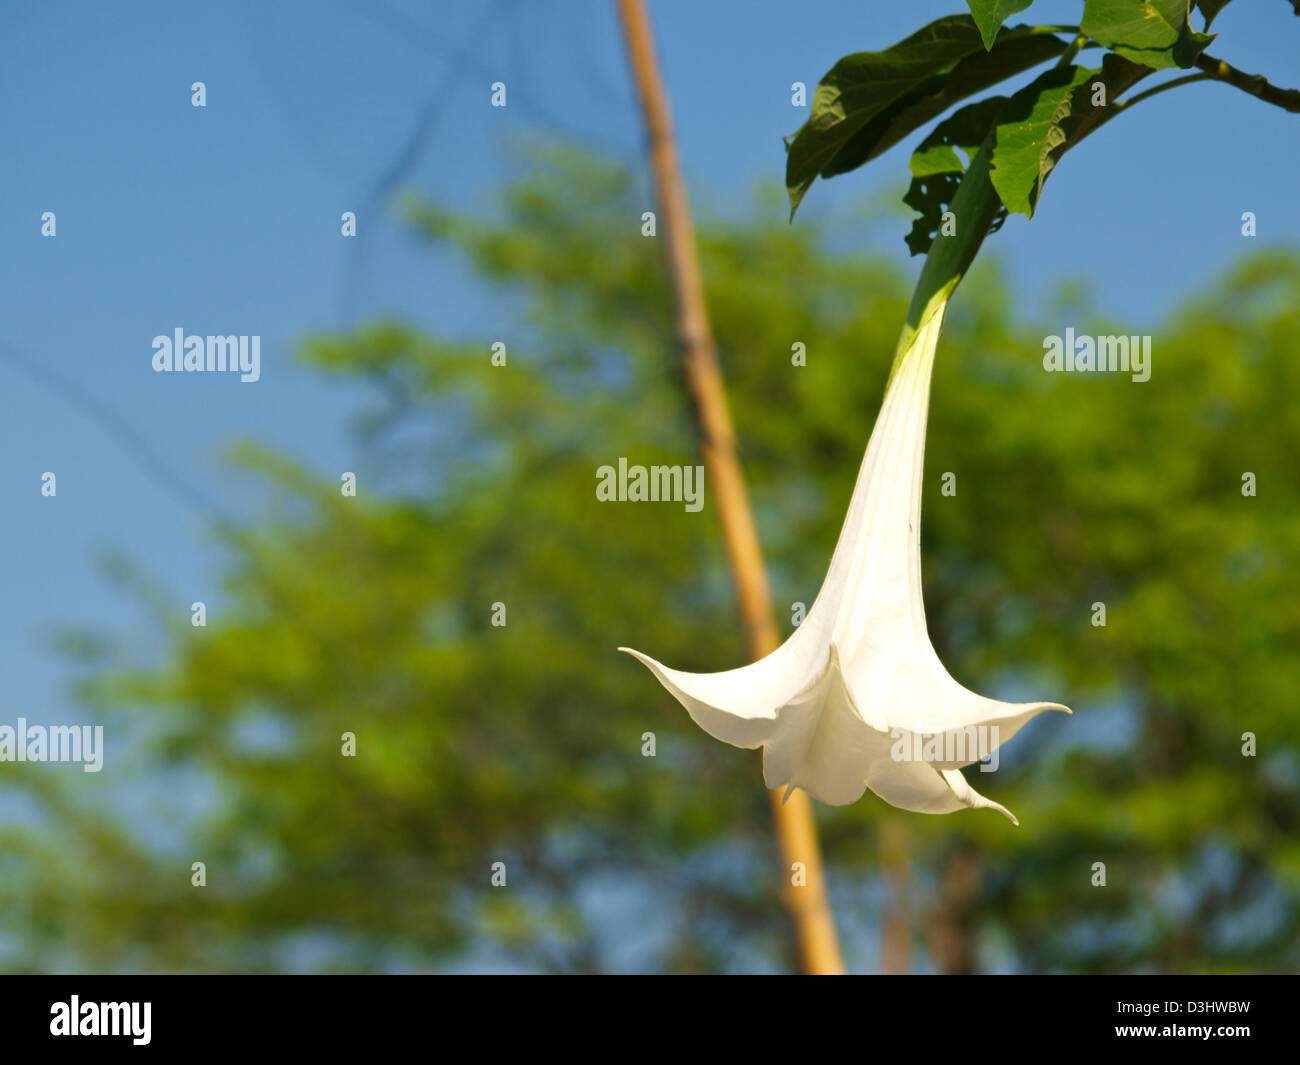 White datura flower (Catura metel Linn. in science name) Stock Photo